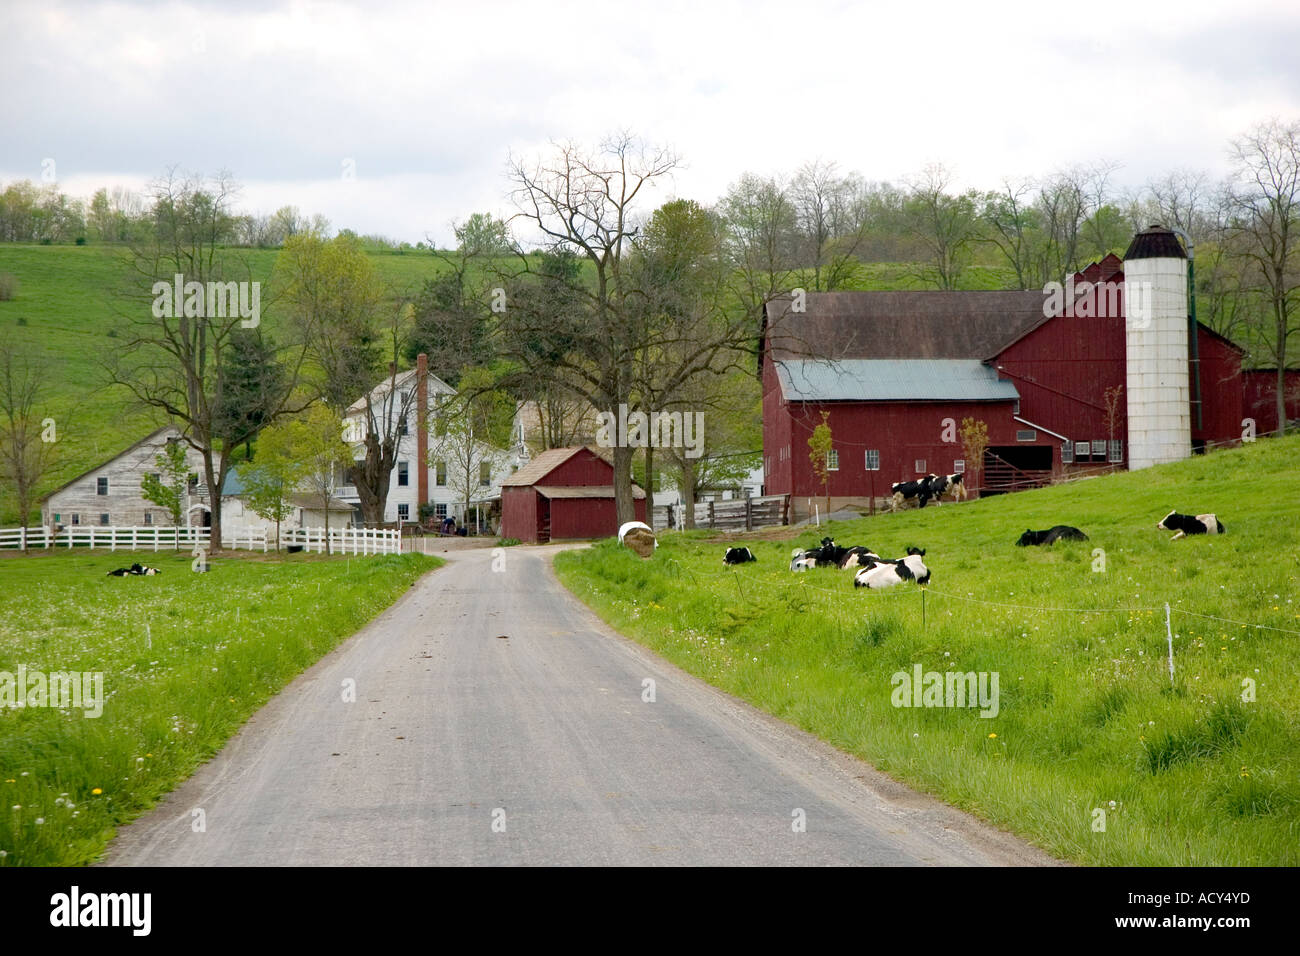 A dairy farm near Berlin, Ohio. Stock Photo